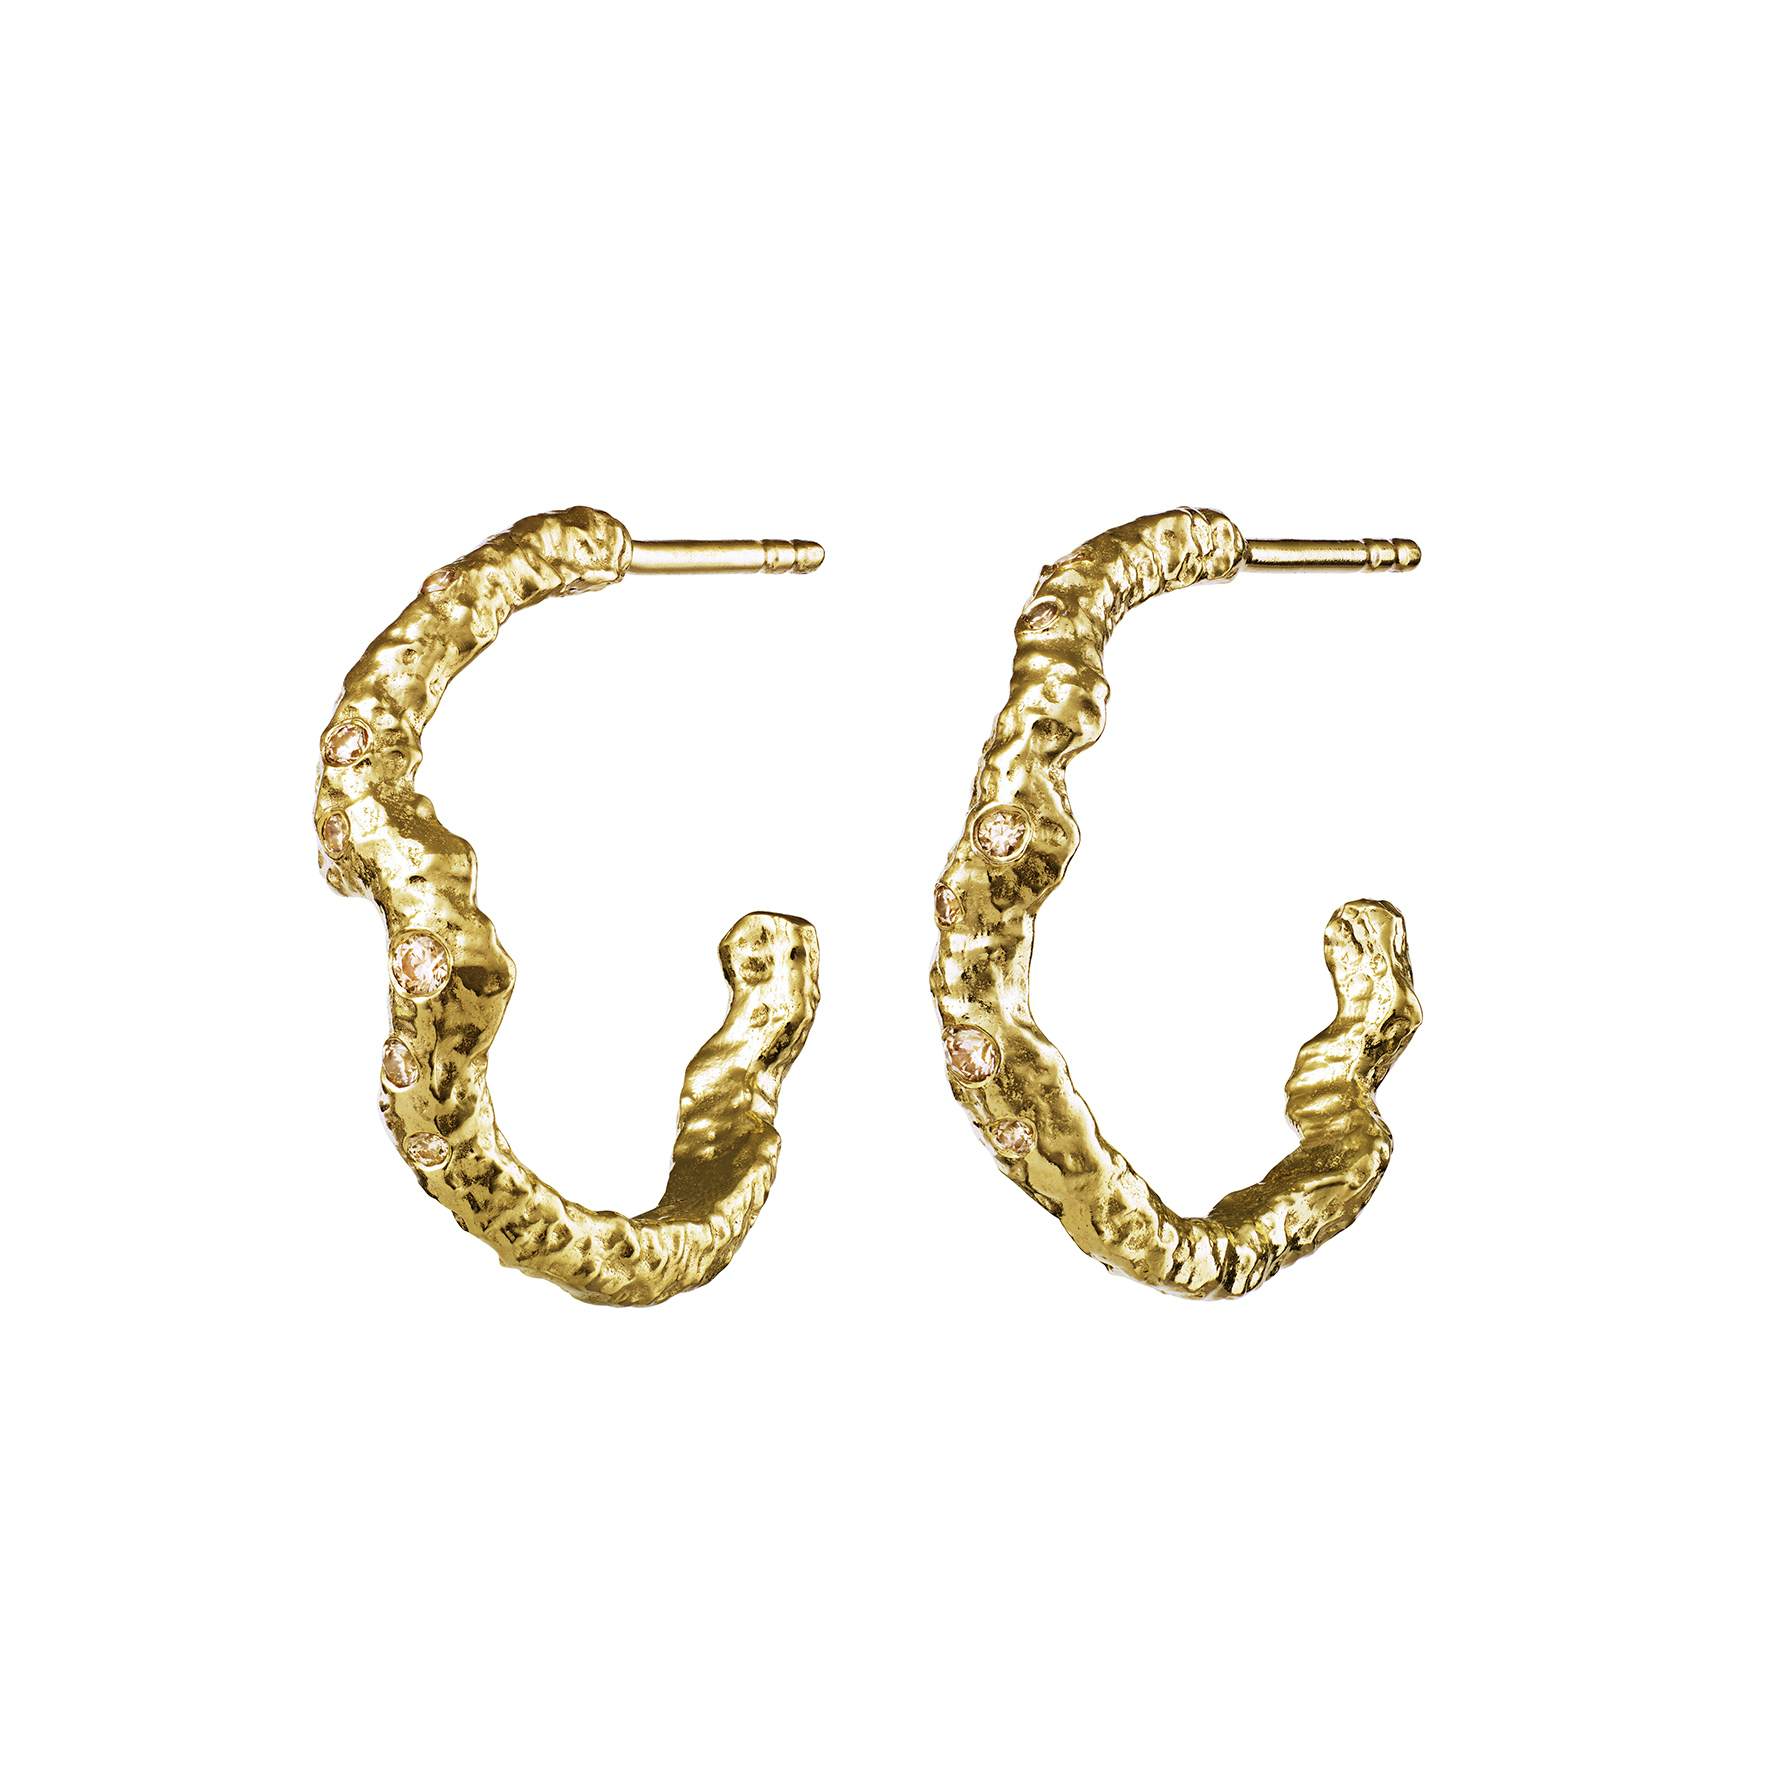 Janine Grande Earrings von Maanesten in Vergoldet-Silber Sterling 925